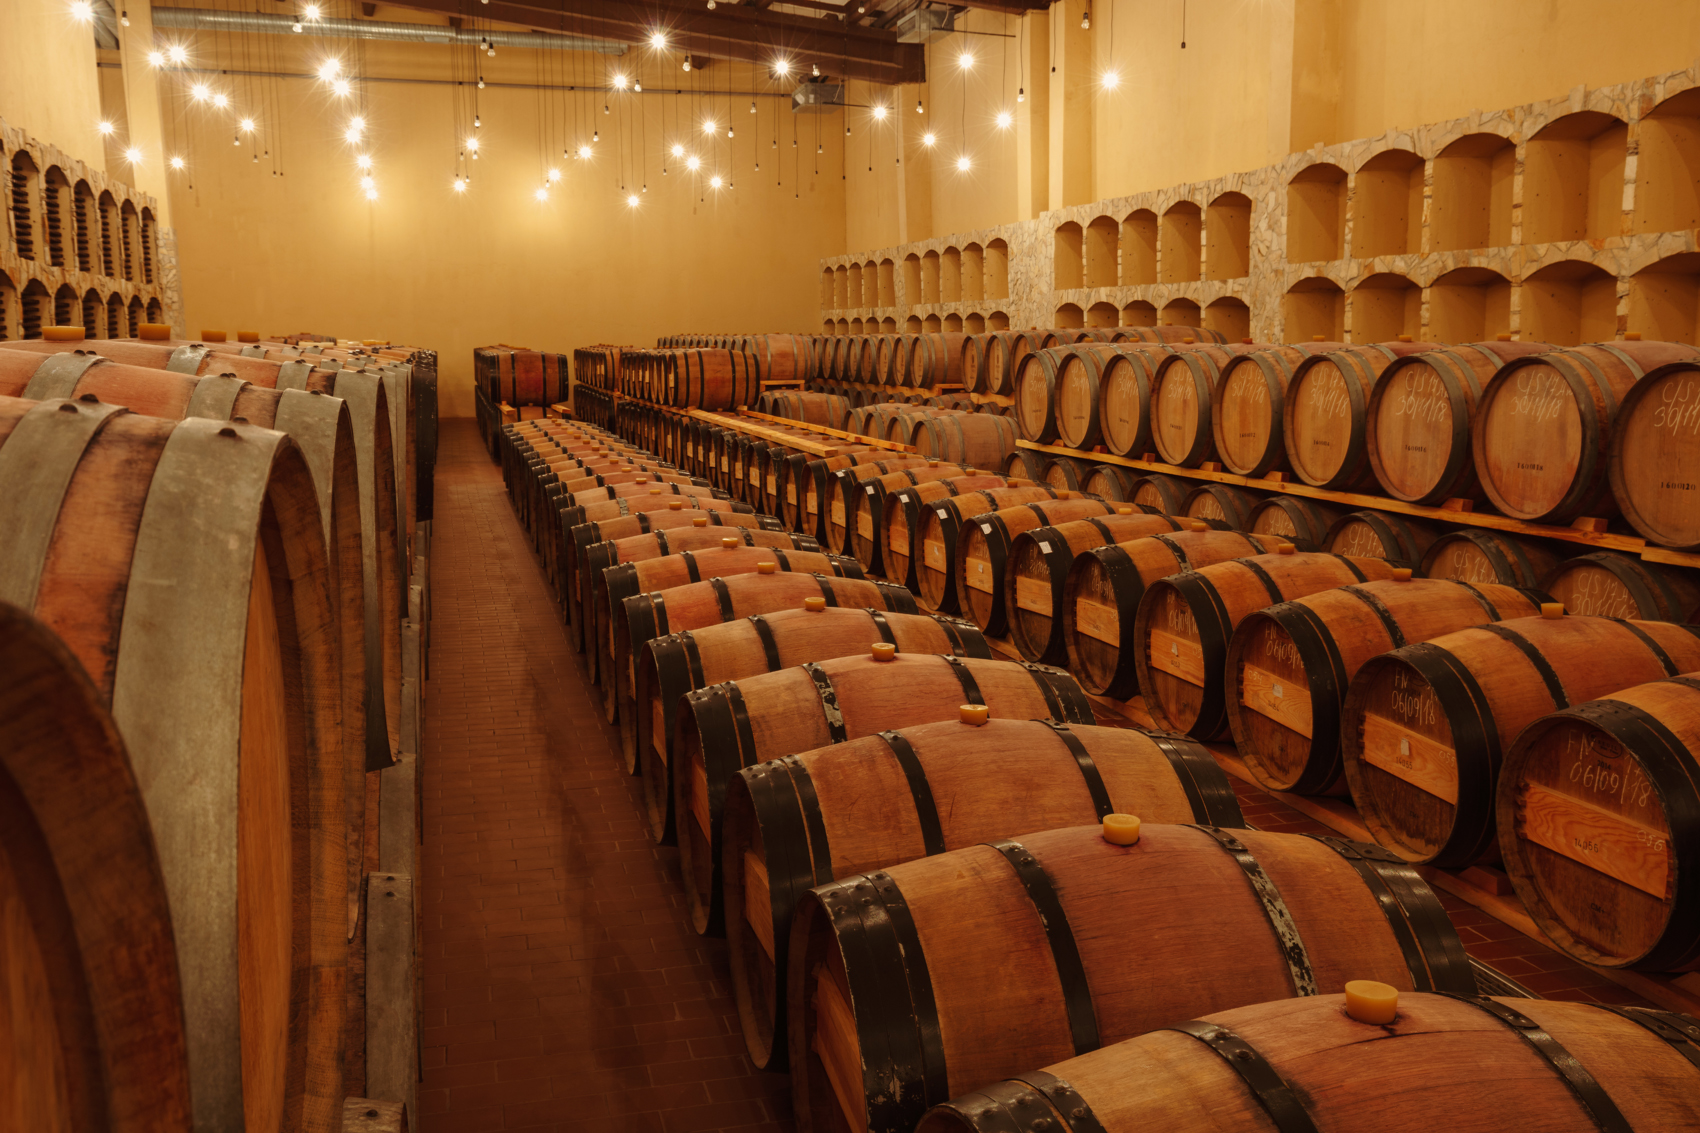 7 Coline de la Vinaria din Vale – un vin ca aurul